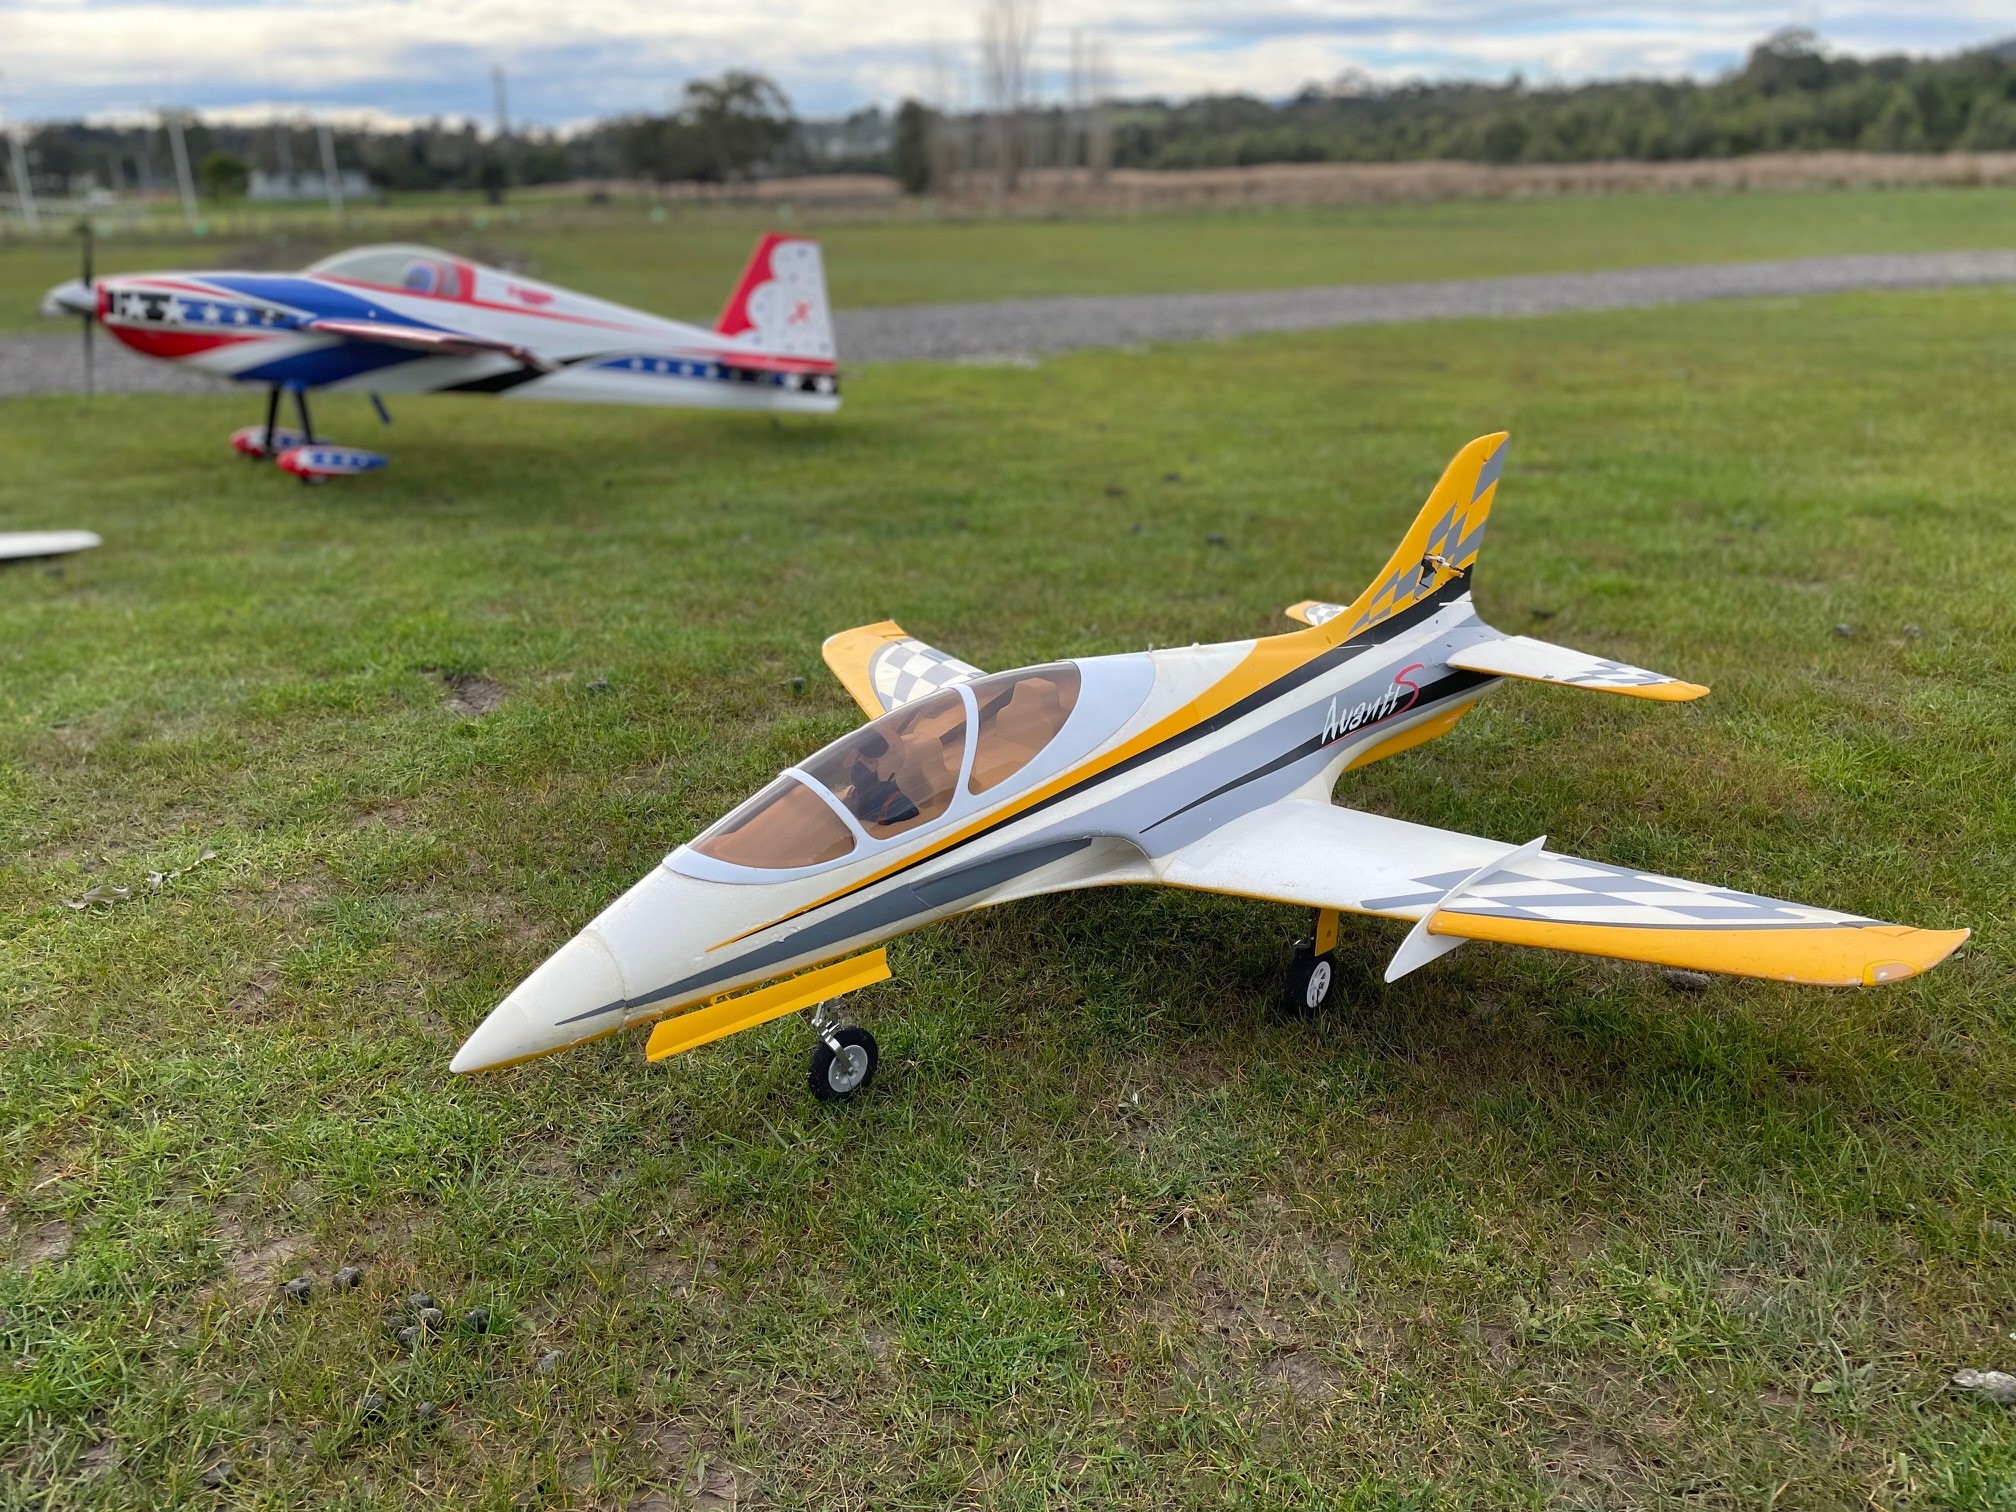 Model aircraft